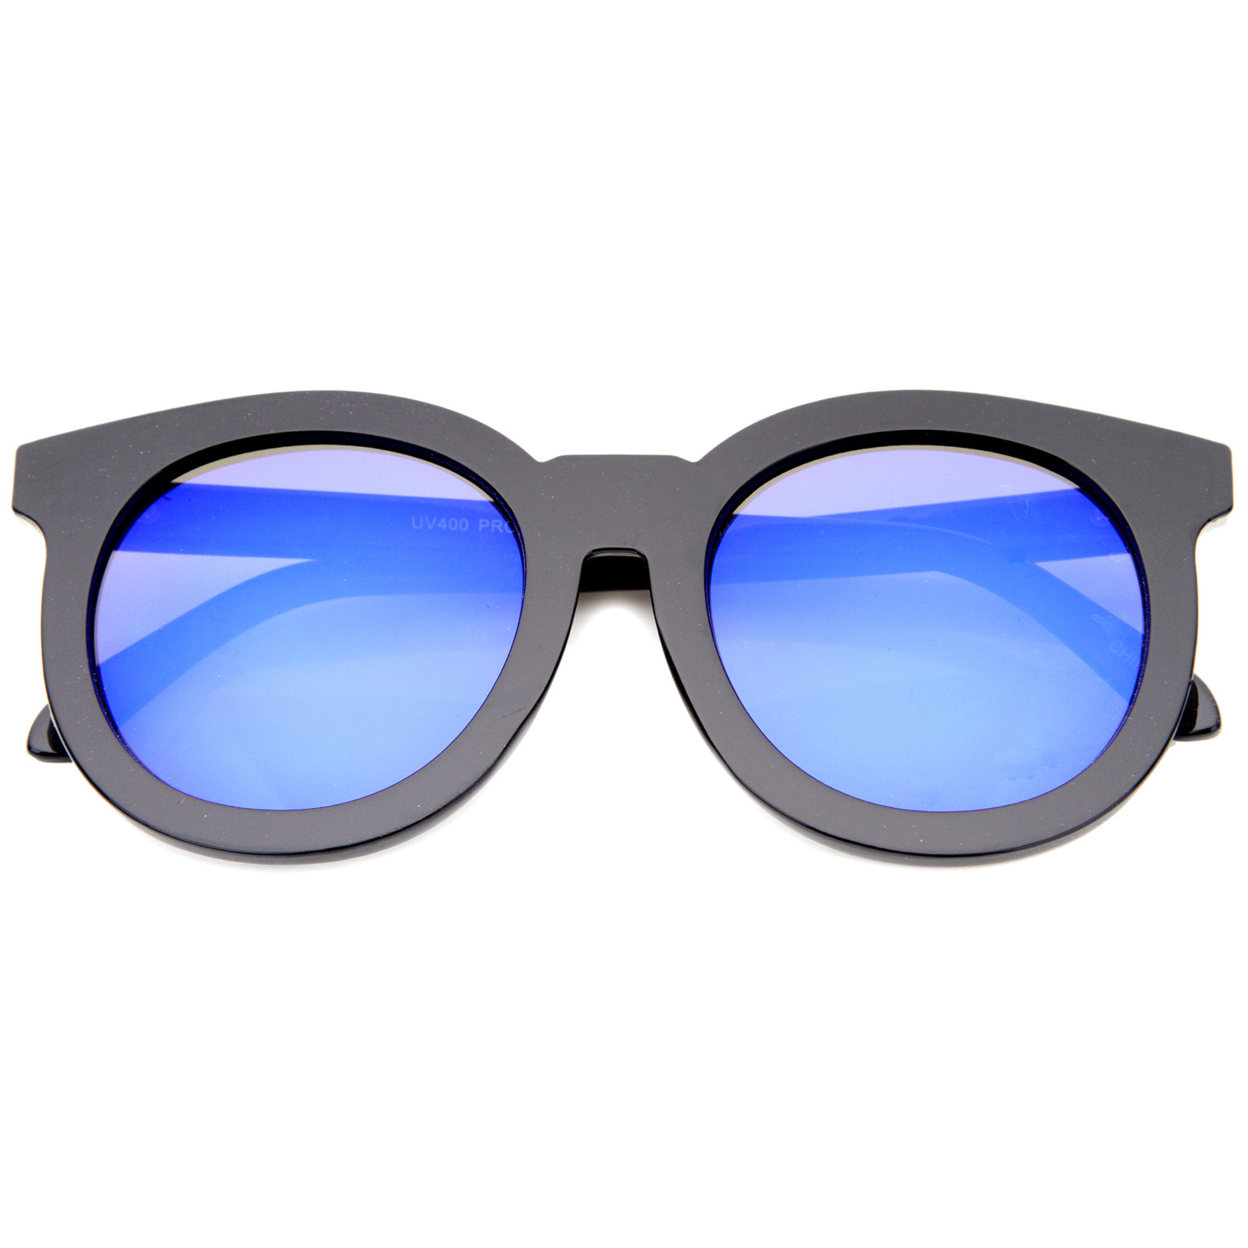 Women's Fashion Oversized Flash Mirrored Flat Lens Round Sunglasses 64mm - Shiny Tortoise-Gold / Violet Mirror